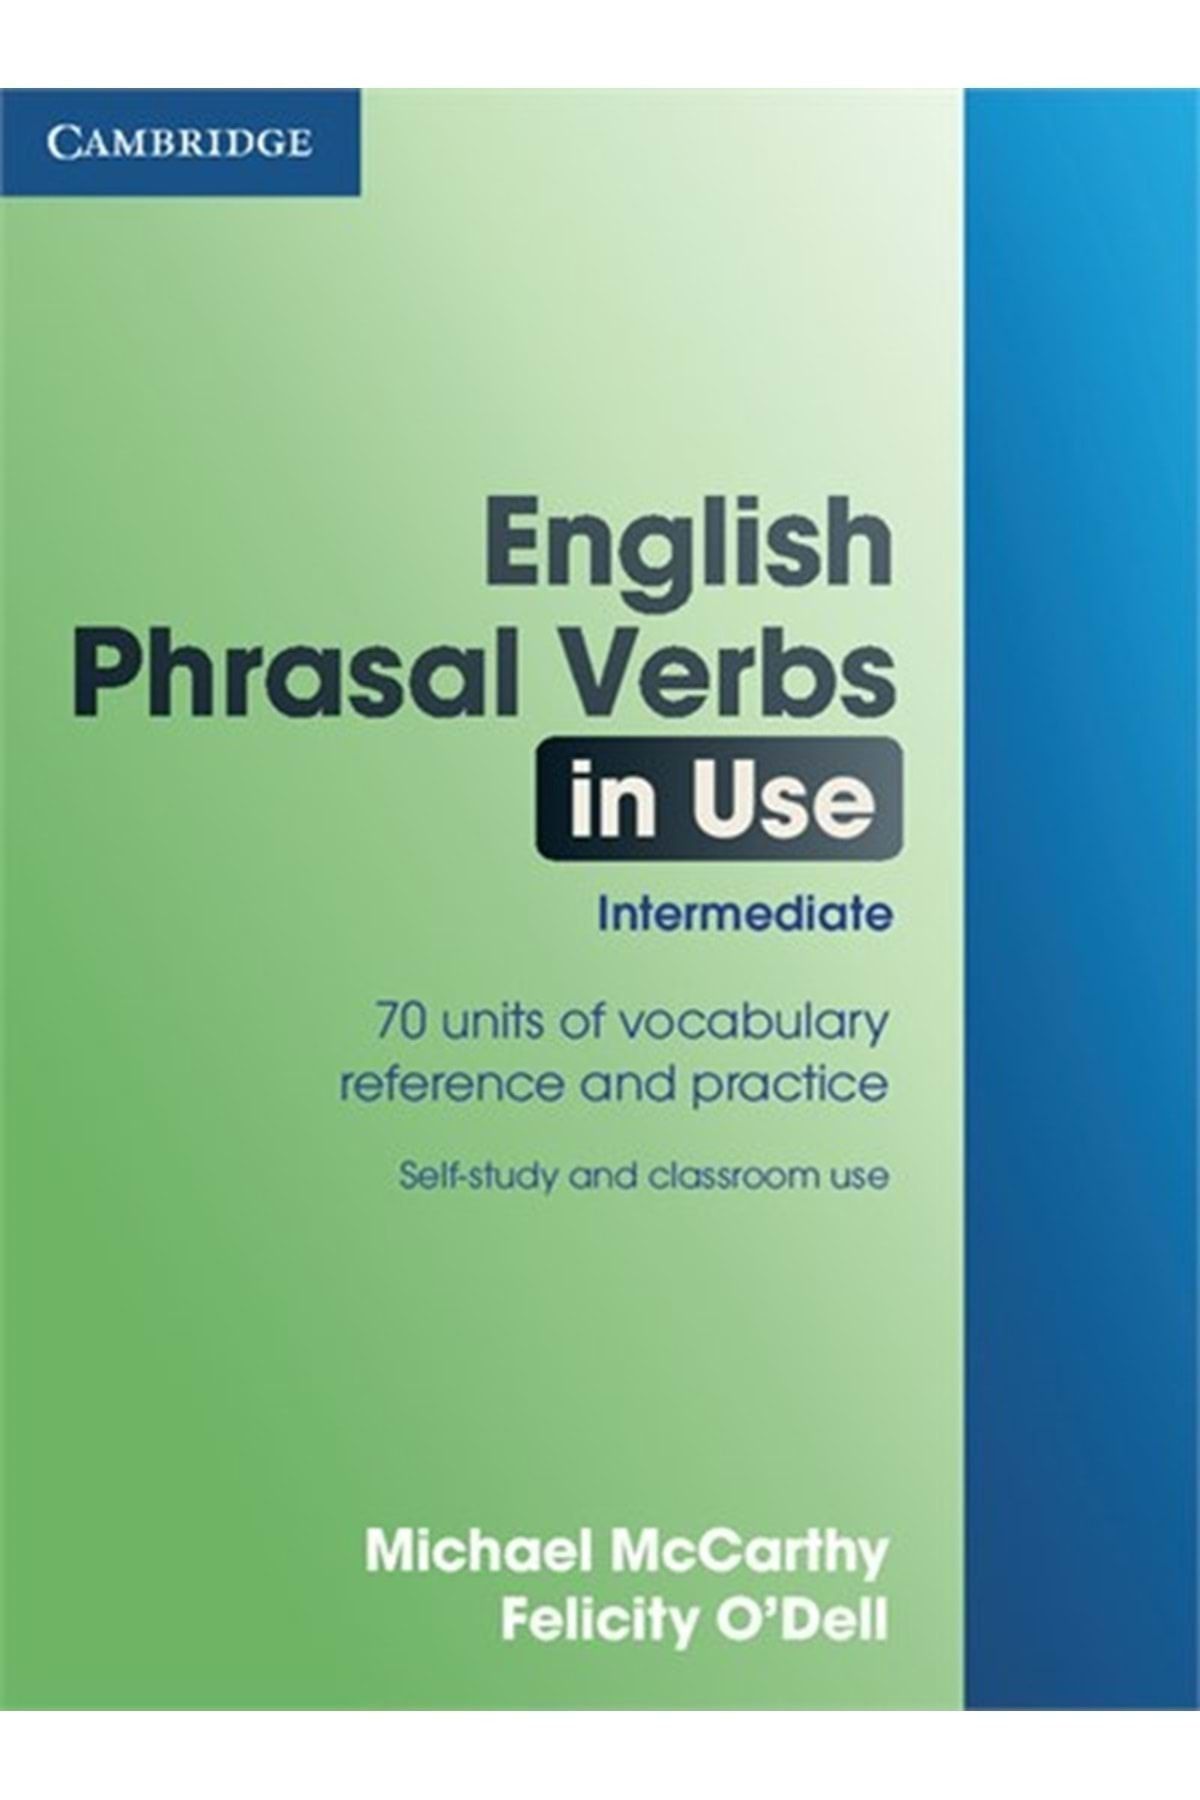 Продажи на английском языке. Cambridge English Phrasal verbs in use Intermediate. English in use Cambridge Phrasal verbs. English-Phrasal-verbs-in-use-Intermediate-book. Phrasal verbs in use Advanced.